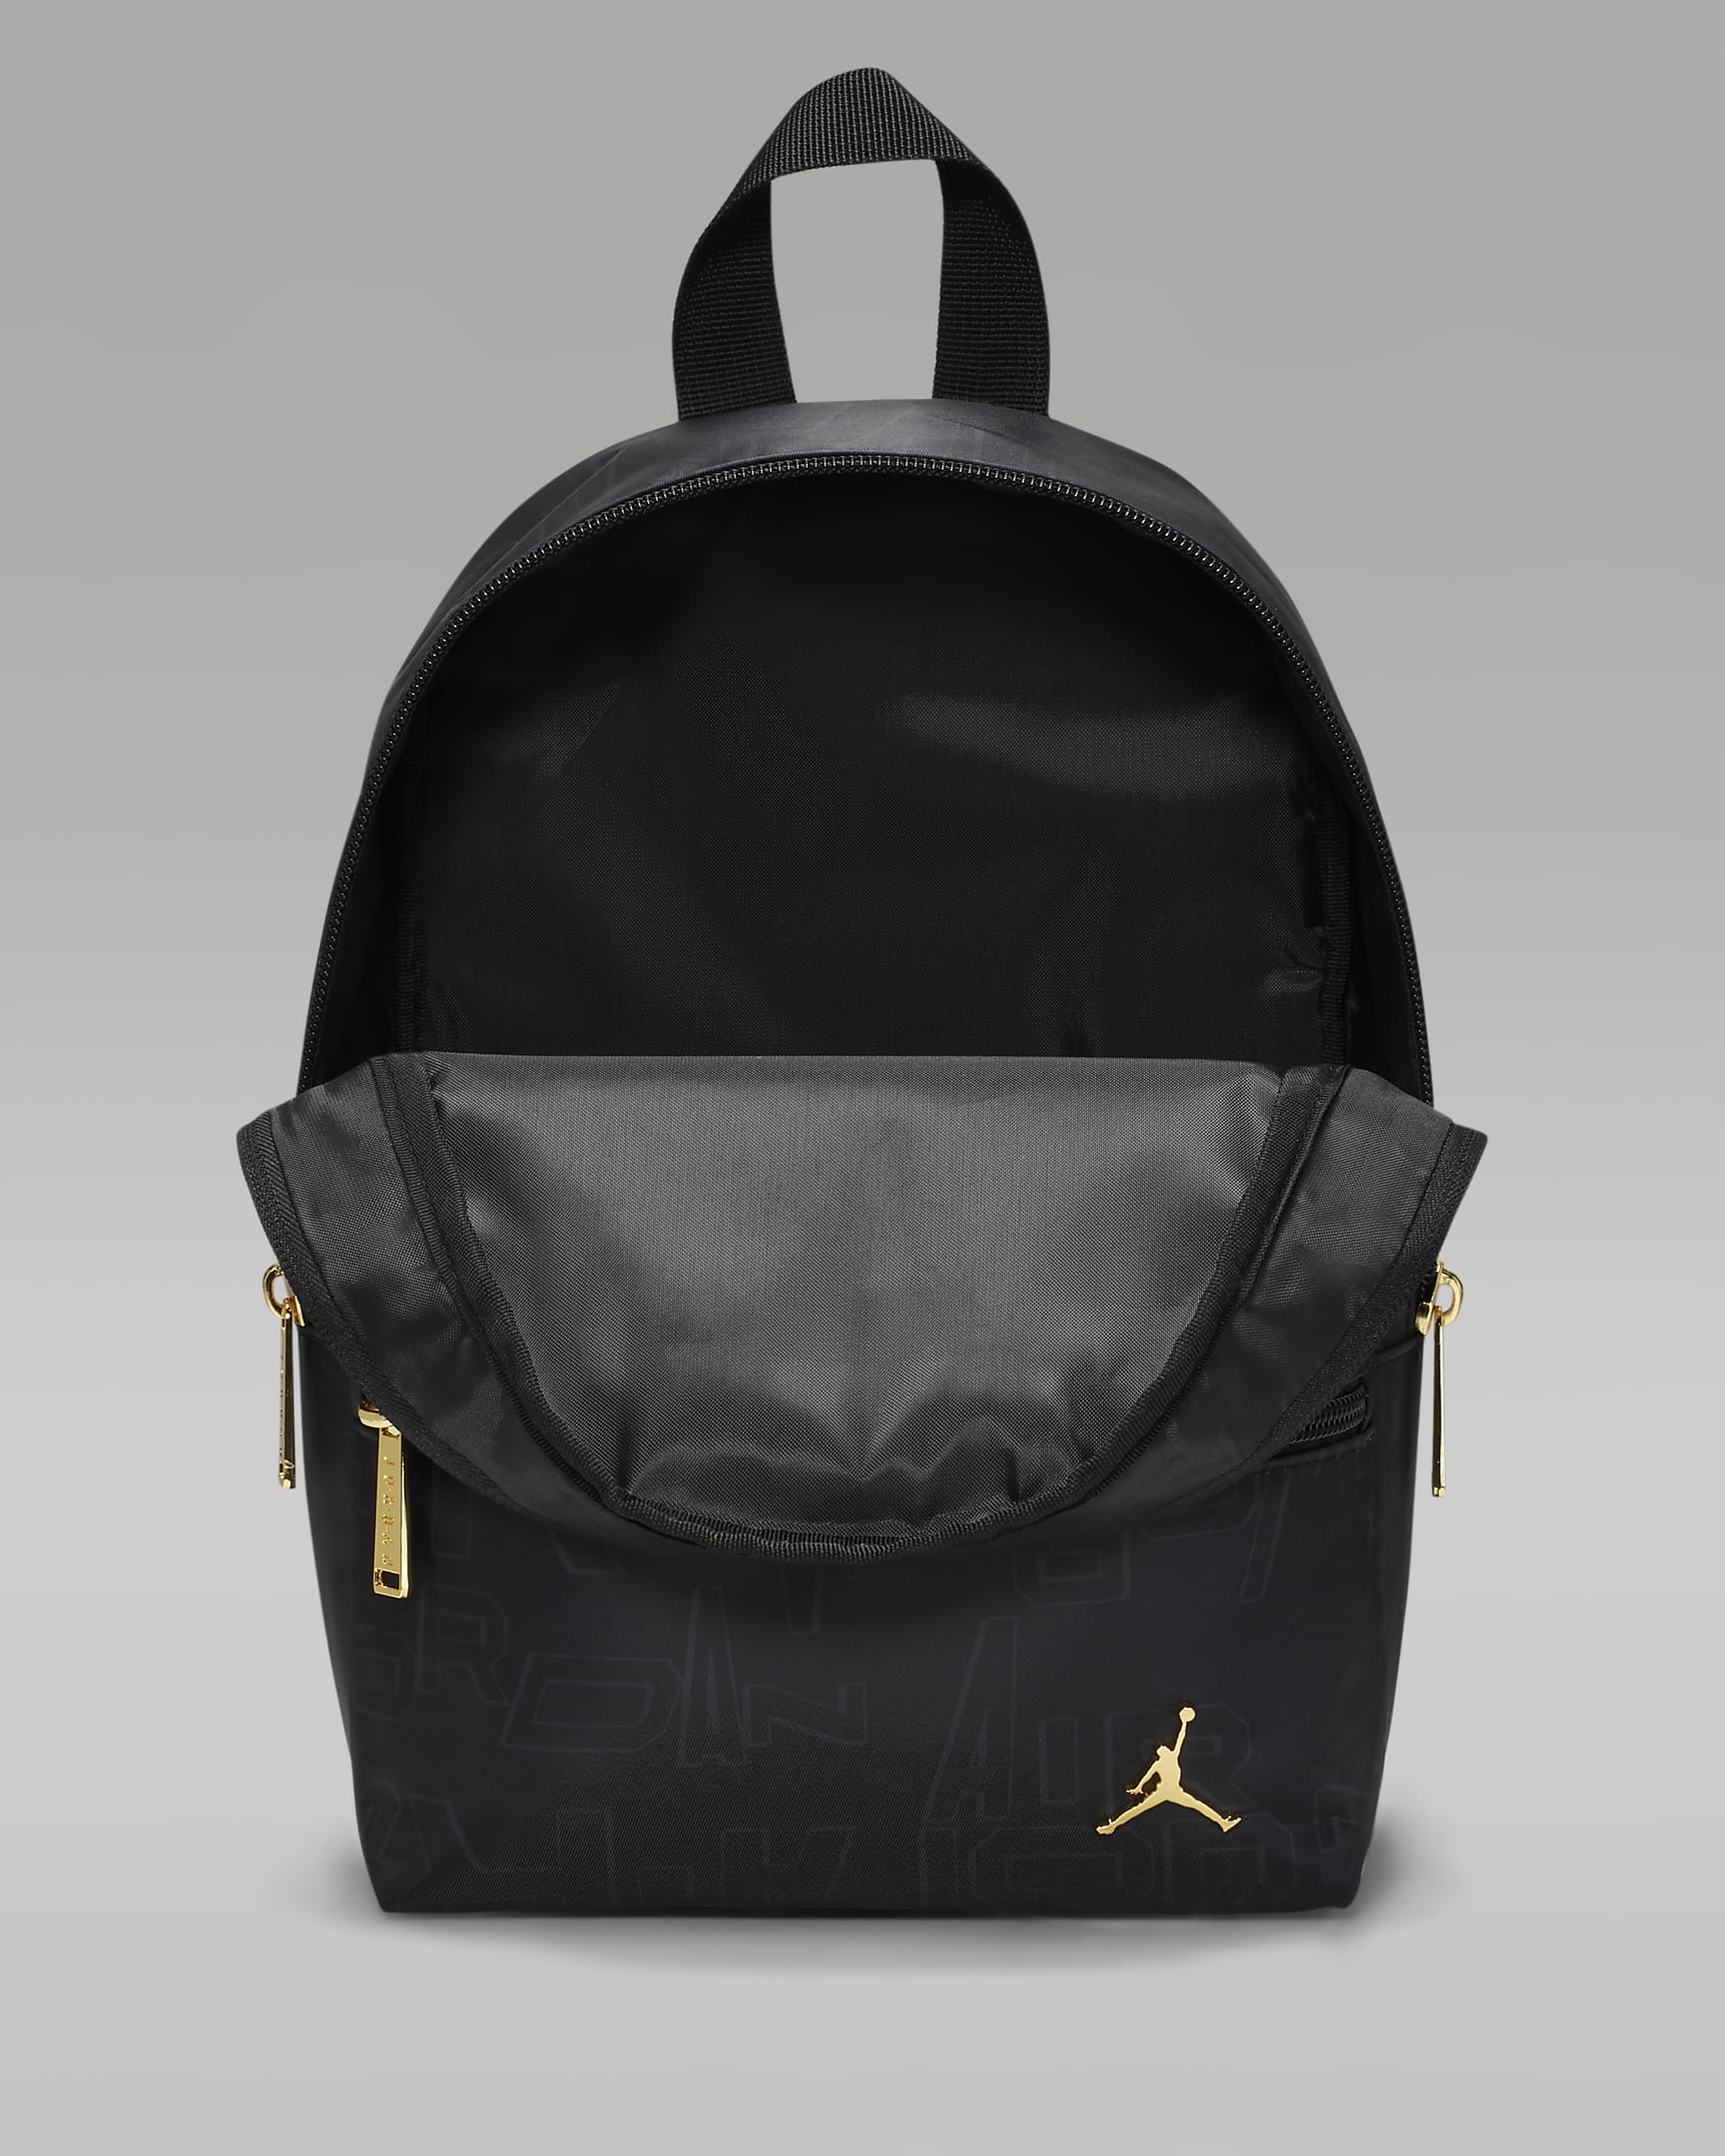 Mochila Jordan Black and Gold Mini Backpack (10 L). Nike.com